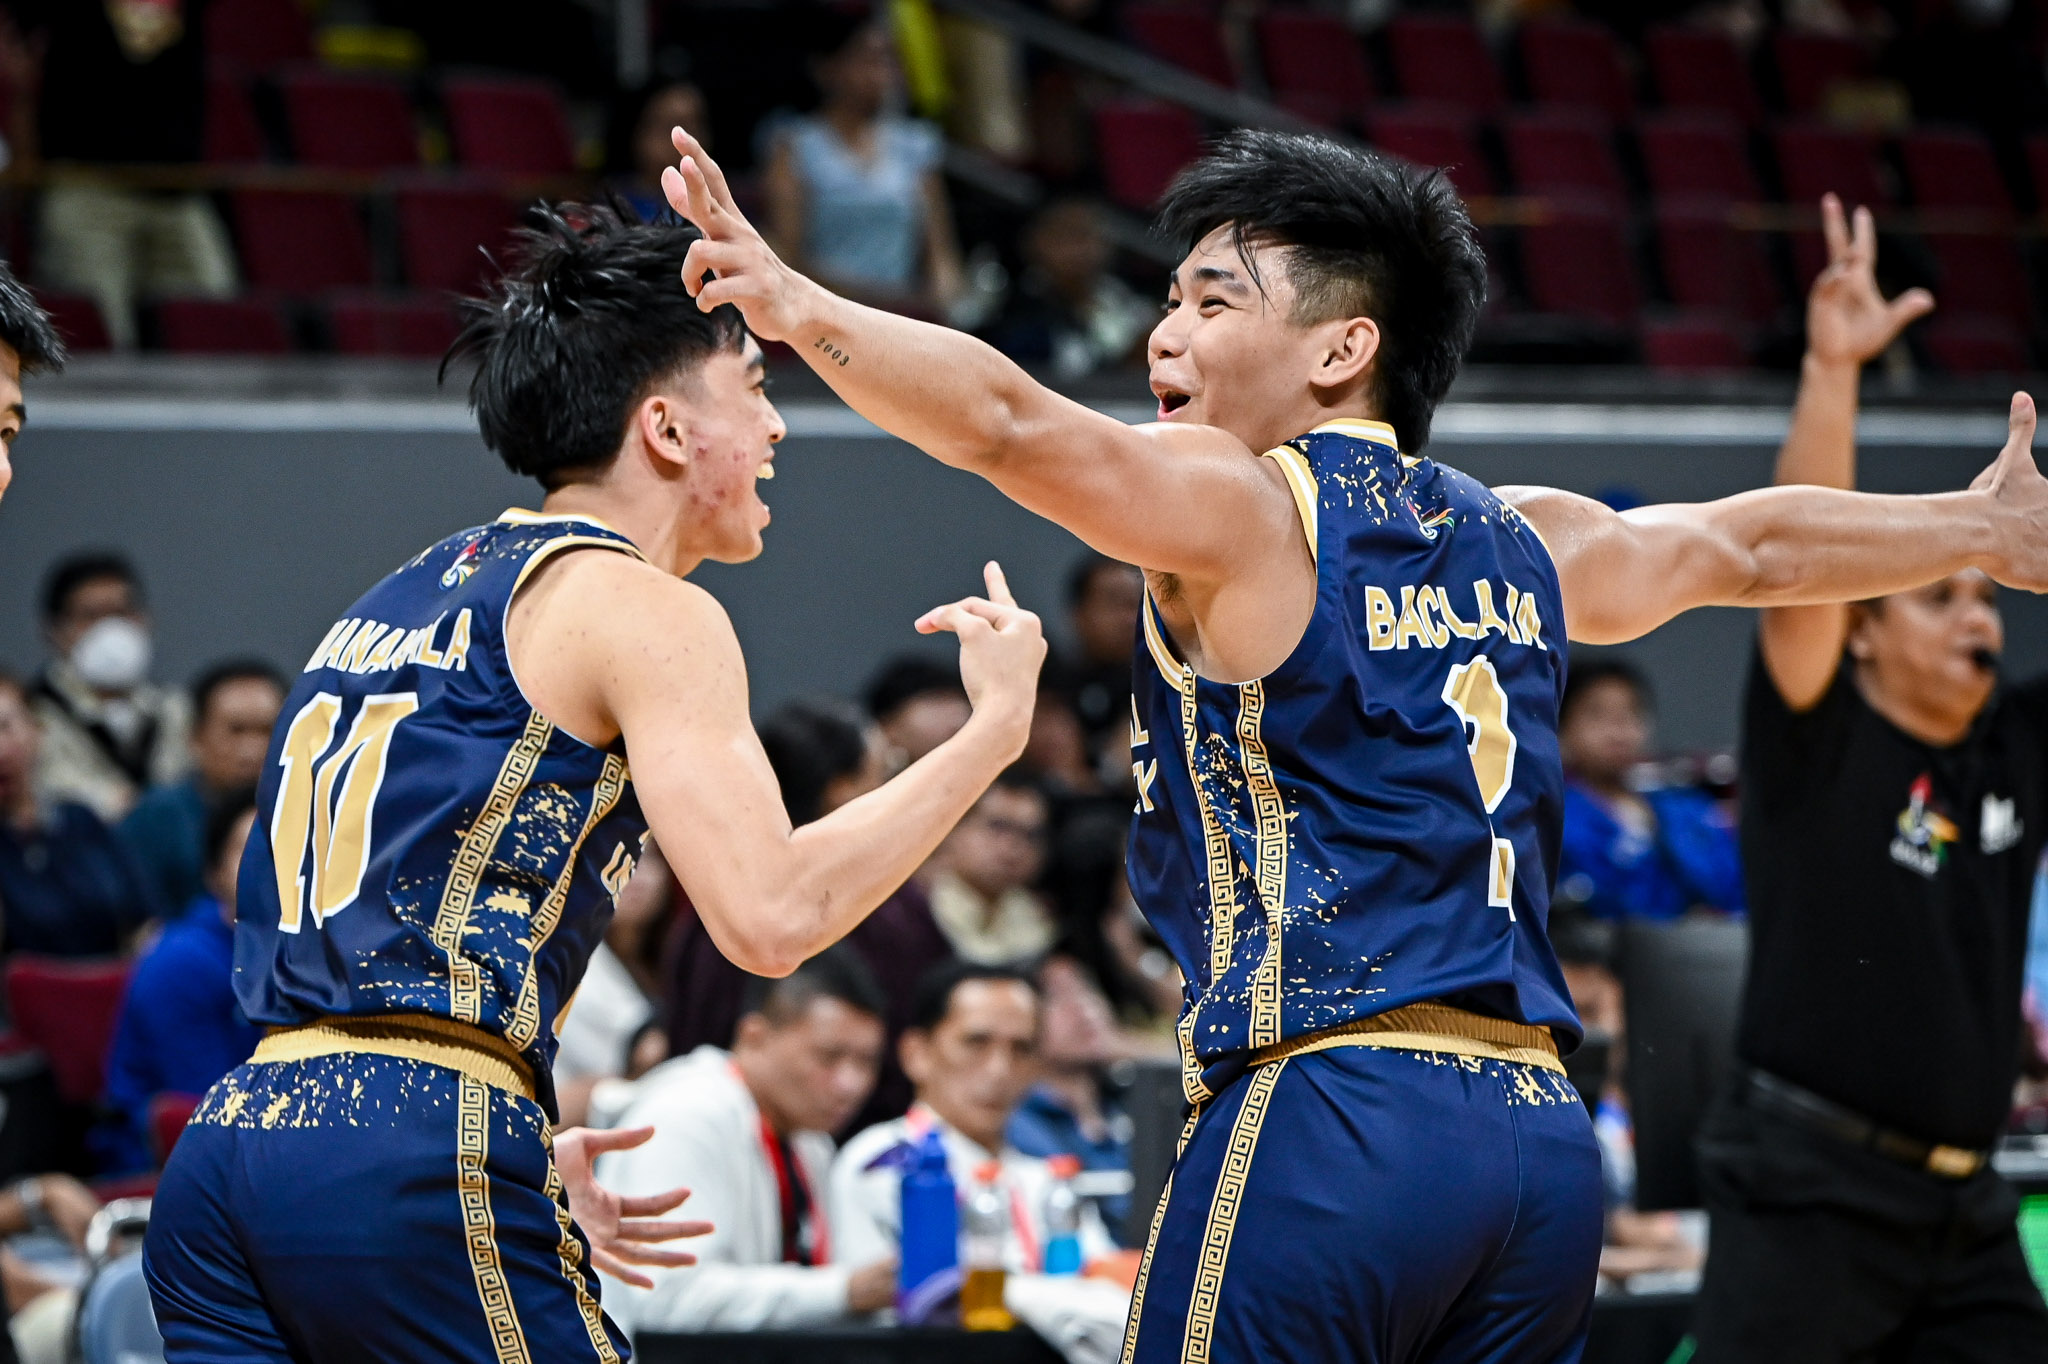 UAAP86-MBB-ATENEO-vs-NU-Manansala-Ian-Baclaan-Kean-7007 Baclaan's performance against 'big fish' Ateneo highlights evolution as PG Basketball News NU UAAP  - philippine sports news